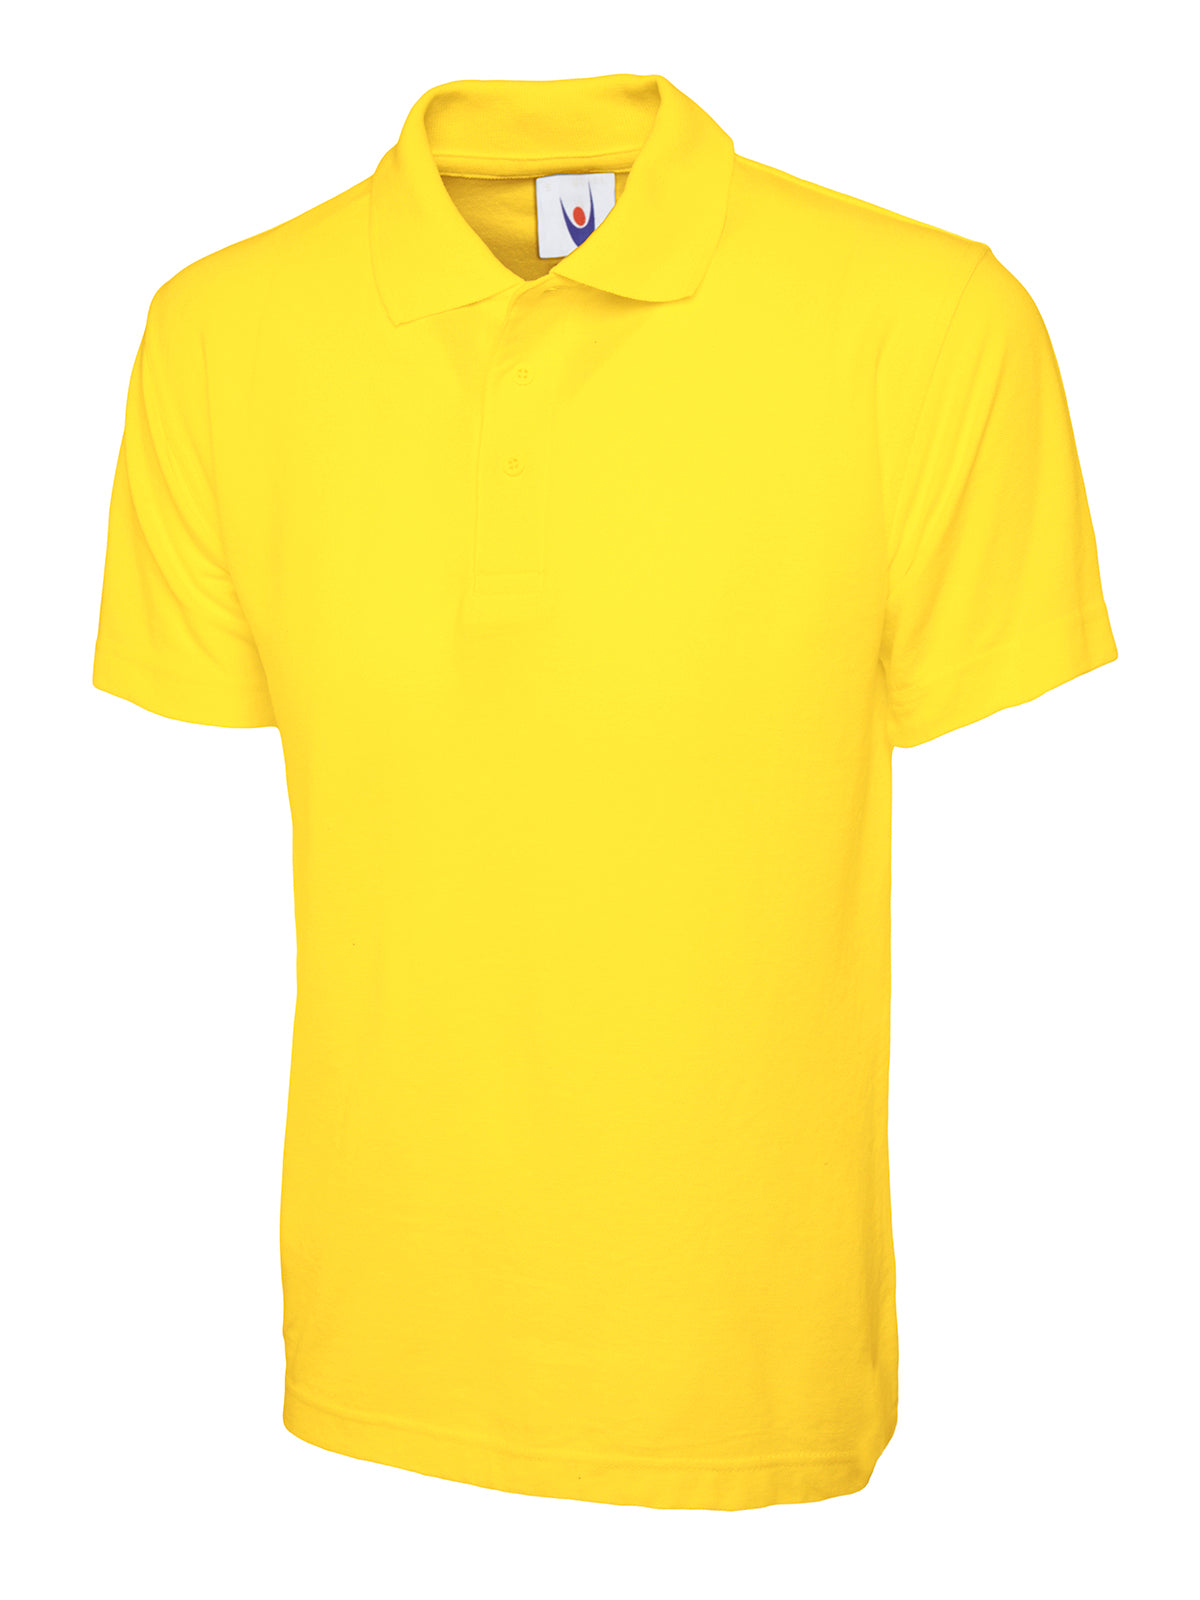 childrens_polo_shirt_yellow